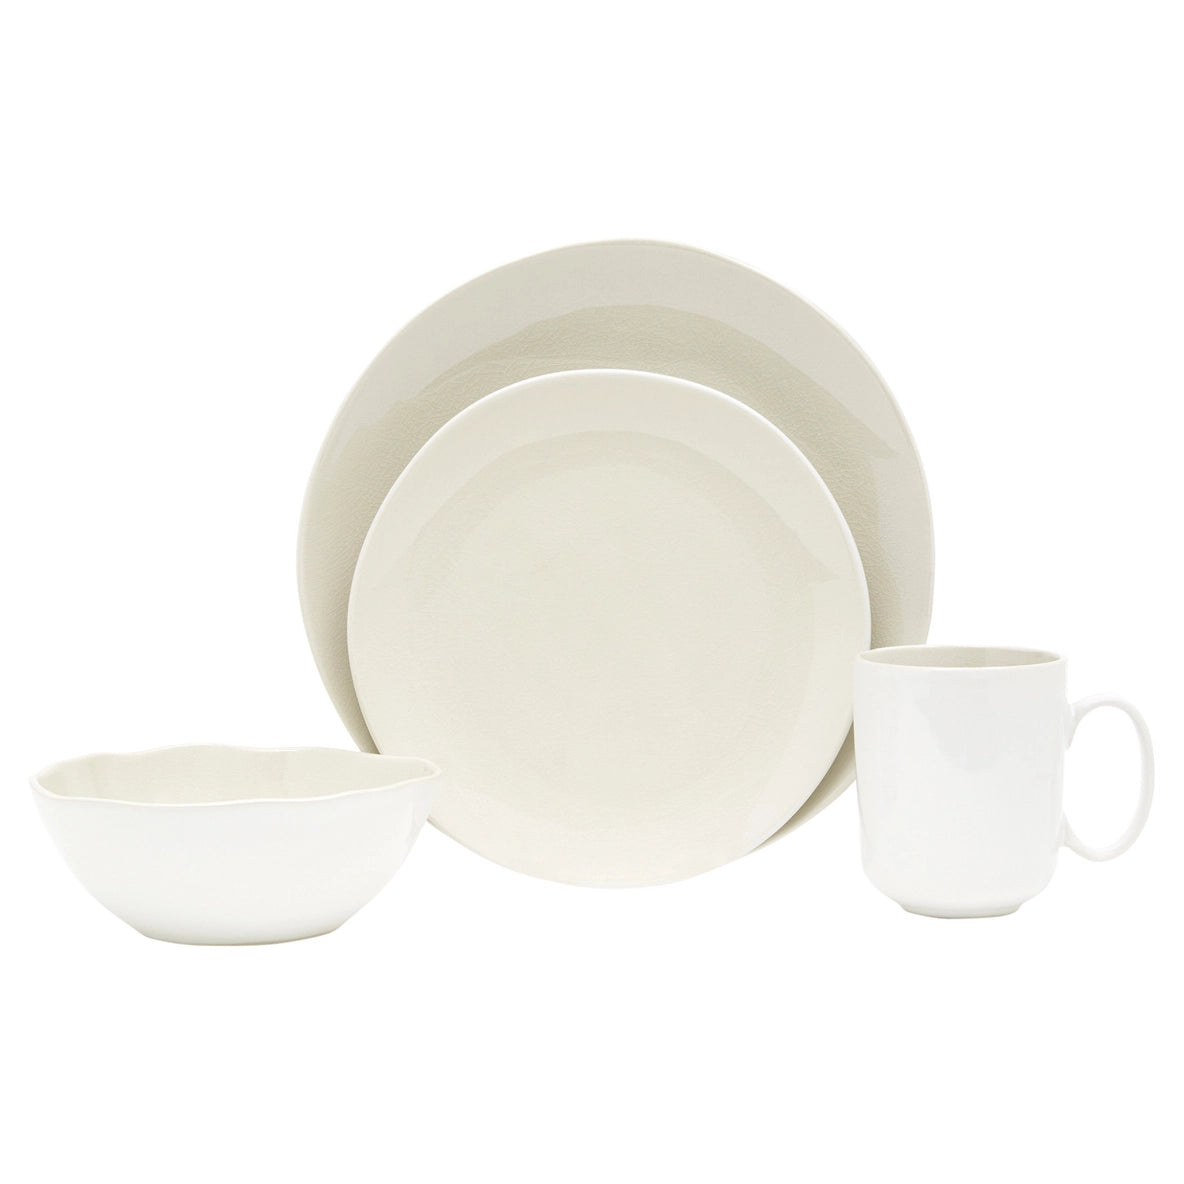 Natural and White Round Ceramic Dinnerware Set - Sixteen Pieces